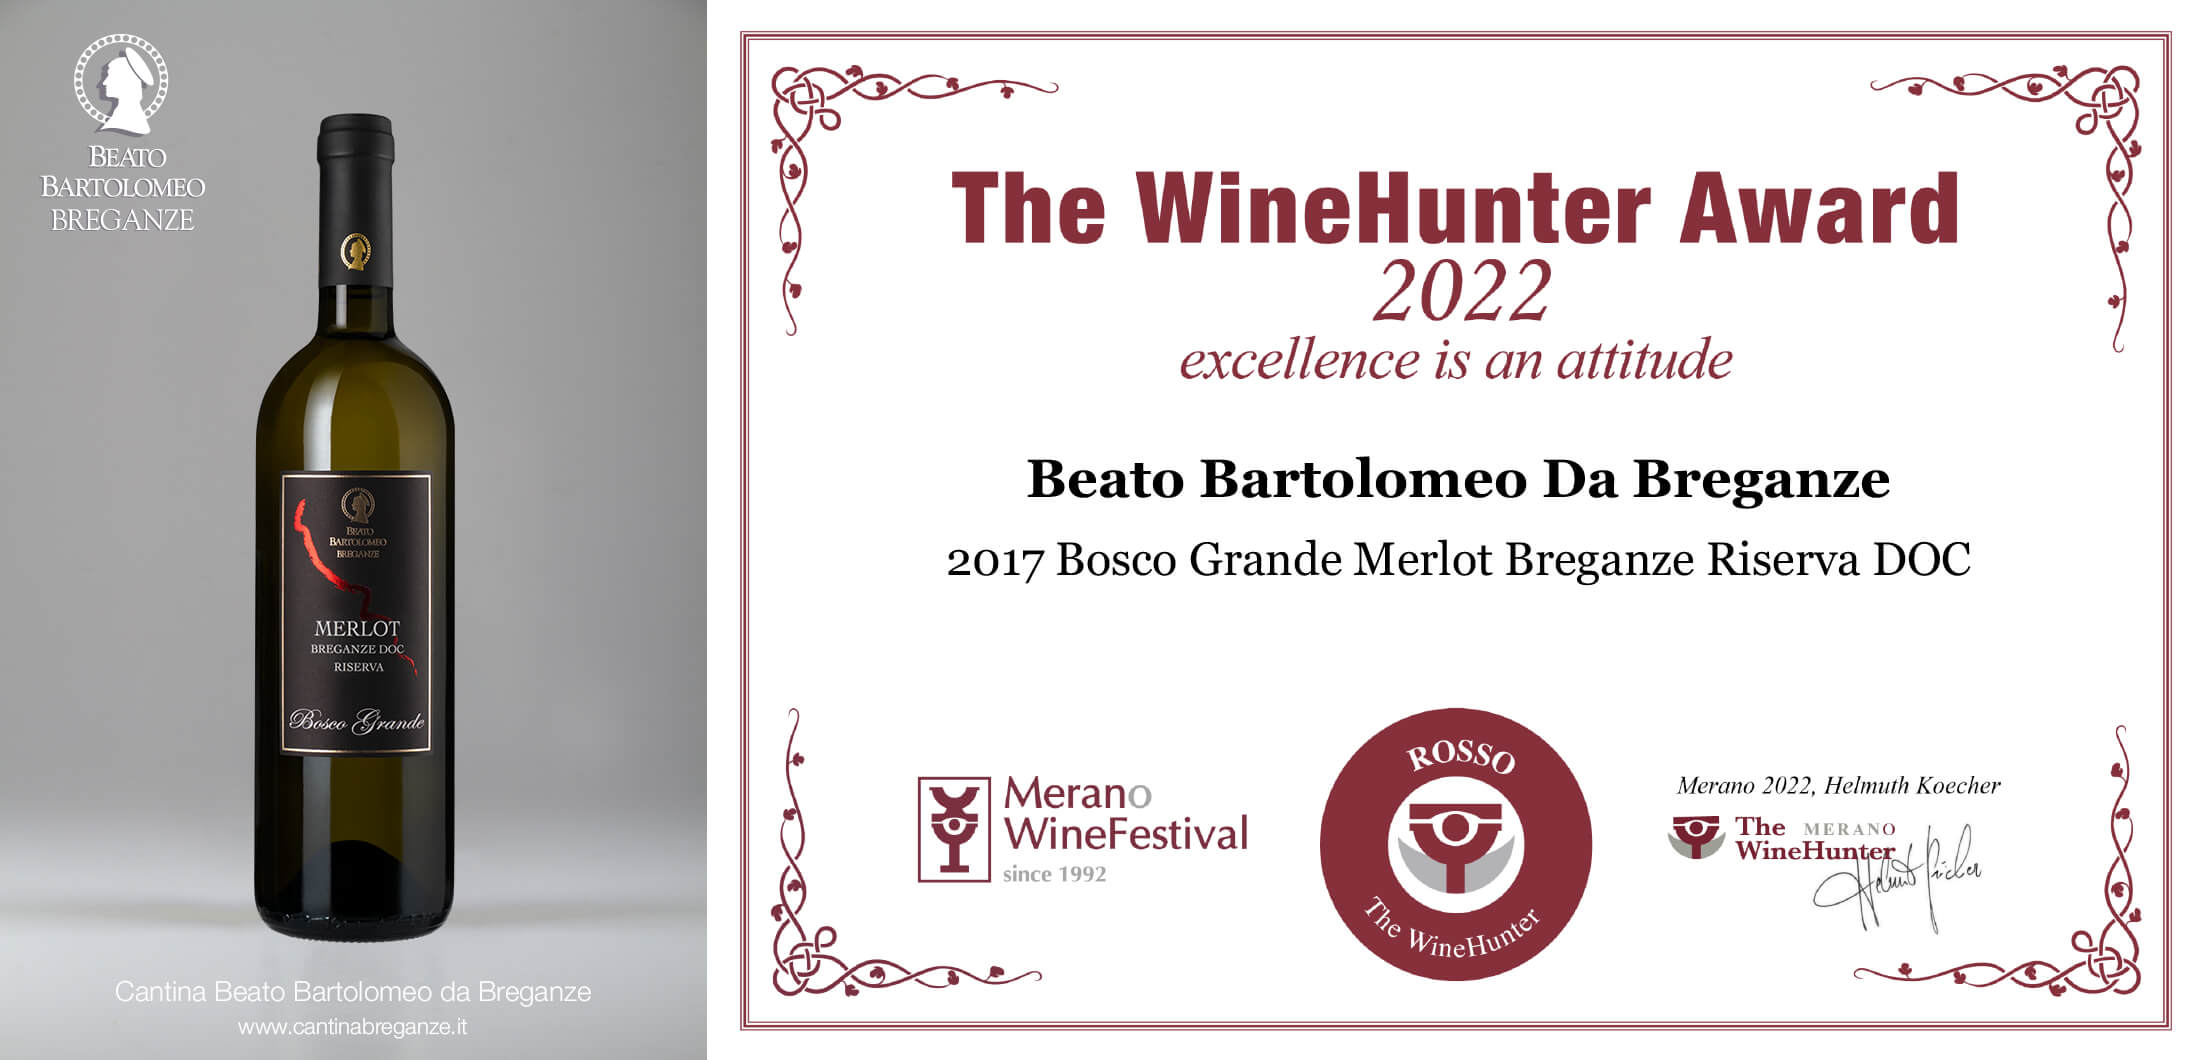 Bosco Grande Merlot Riserva DOC Breganze The WineHunter Awards 2022